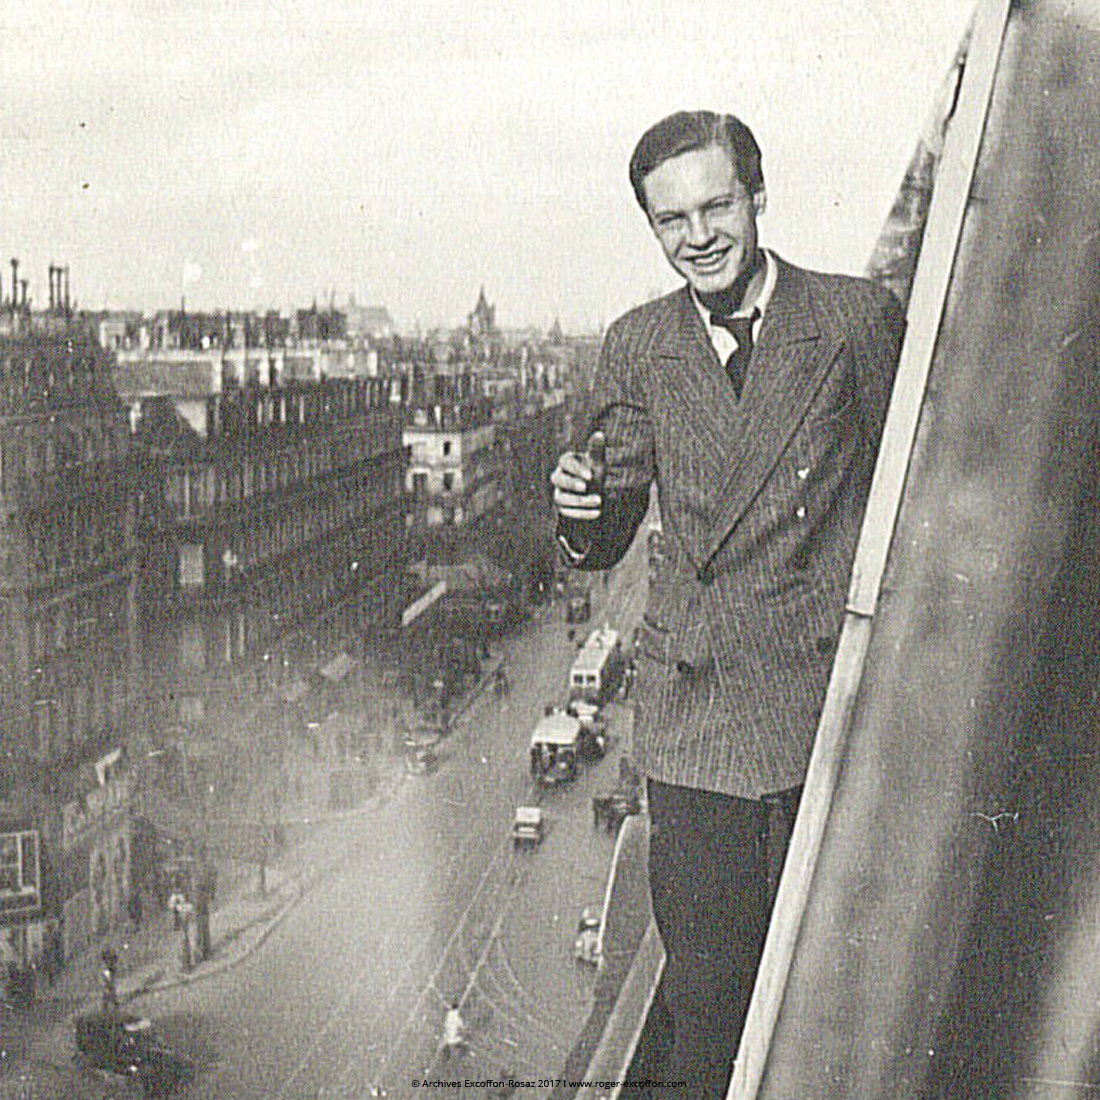 Roger Excoffon 1930 portrait photo